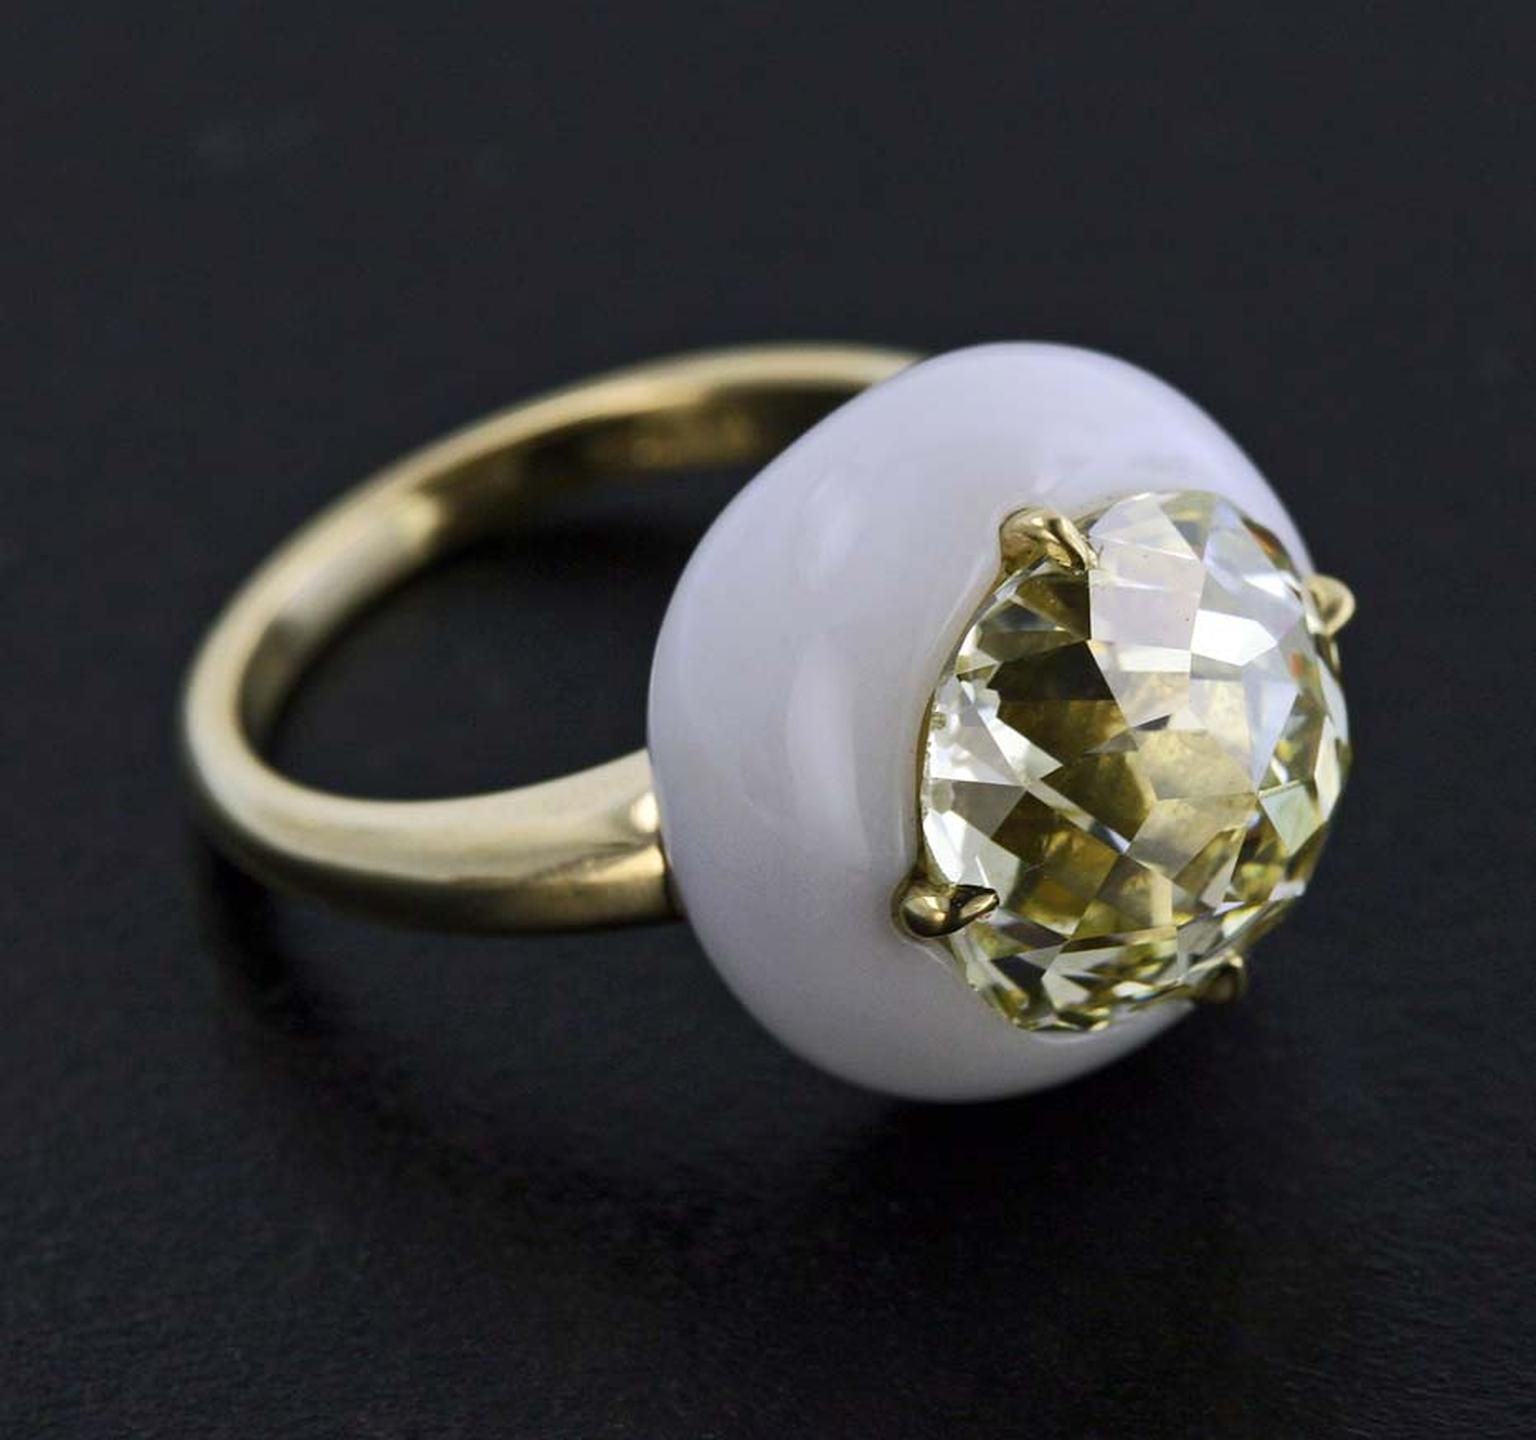 James de Givenchy Taffin Jubilee Cut diamond, cacholong and